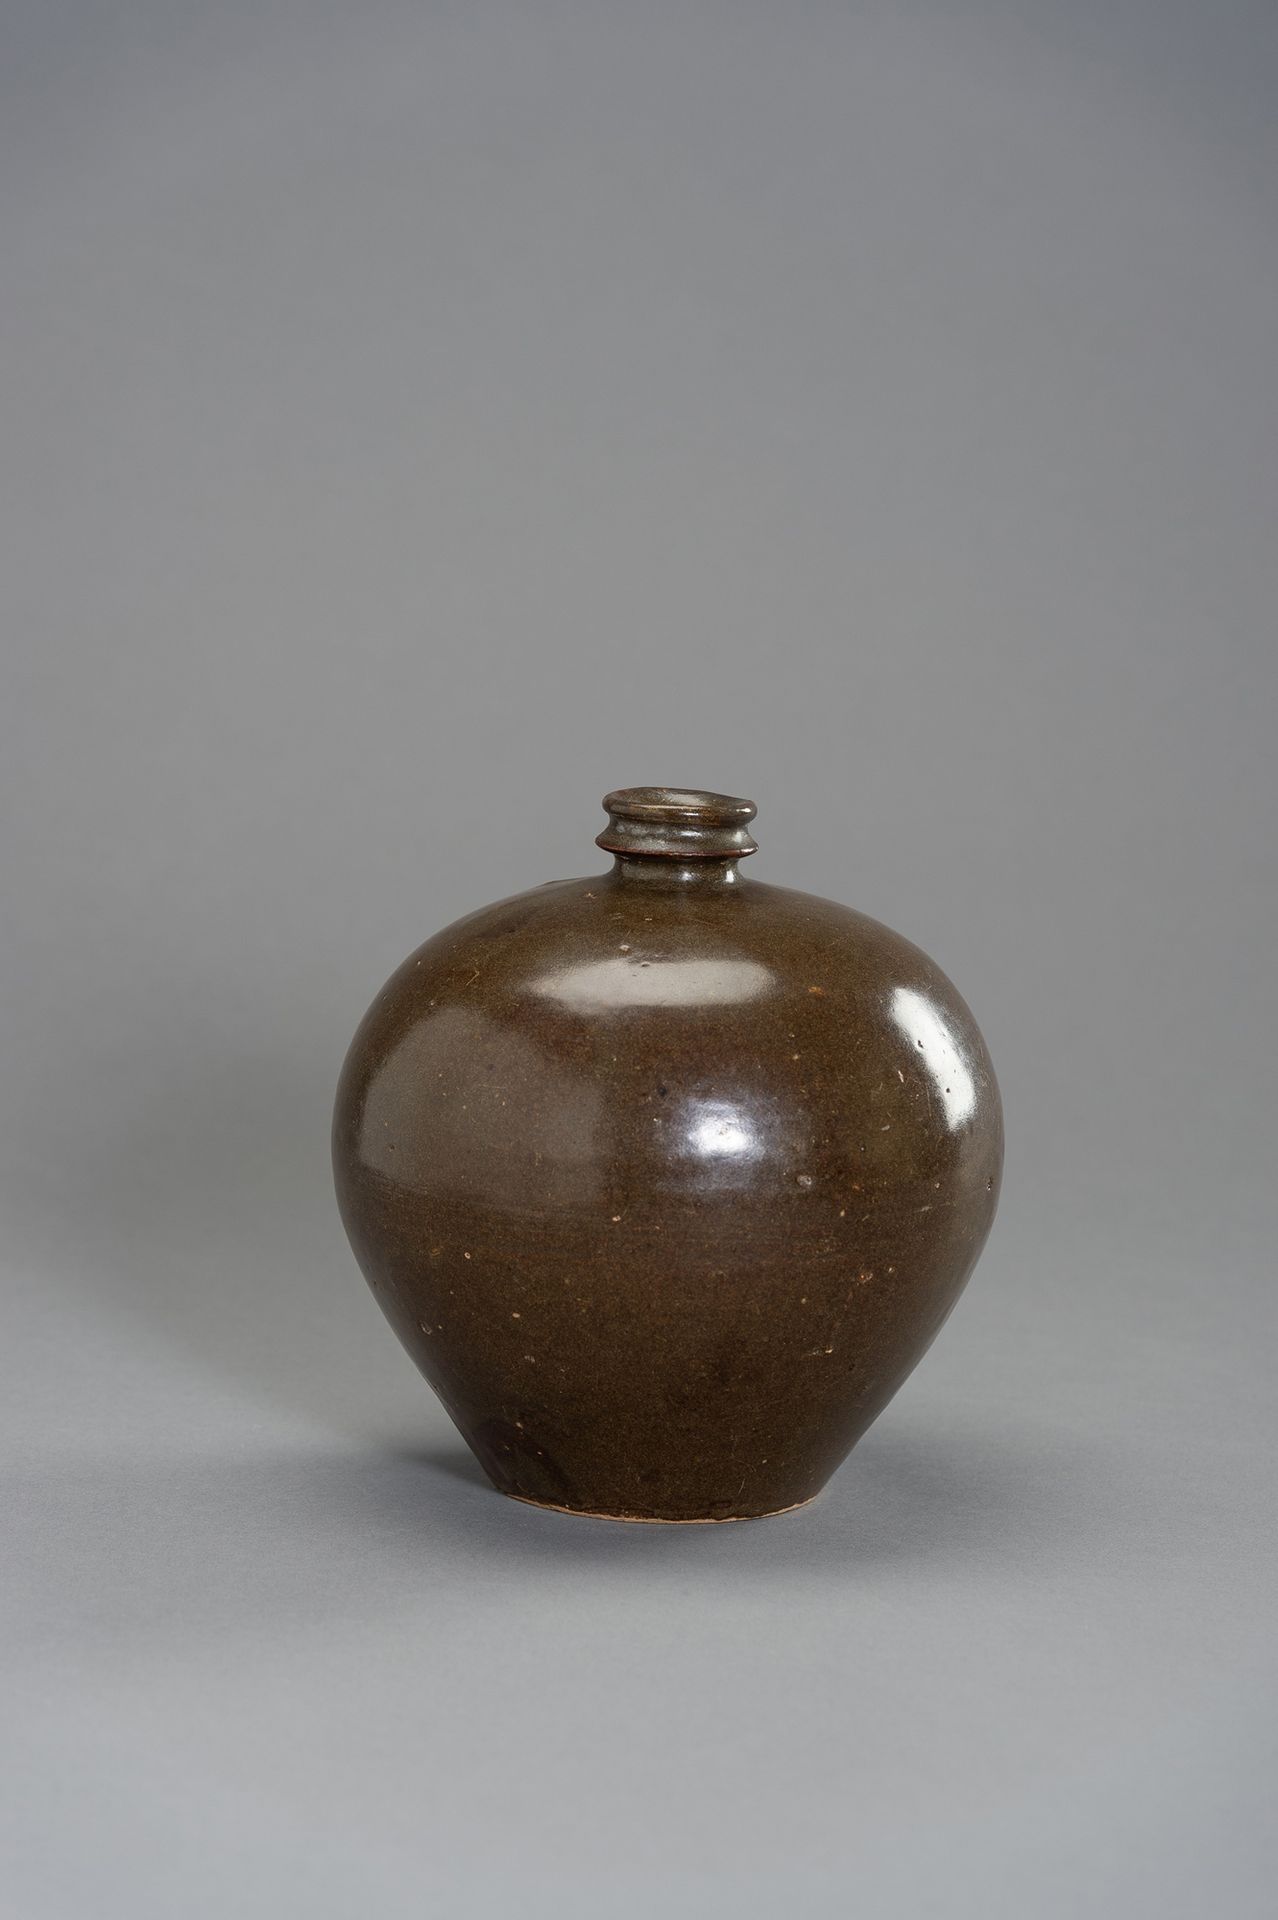 A HENAN BROWN GLAZED BOTTLE VASE 河南棕色釉面瓶
中国，宋代（10-13世纪），河南省。卵形的陶瓷花瓶上有均匀的棕色釉。

状况&hellip;